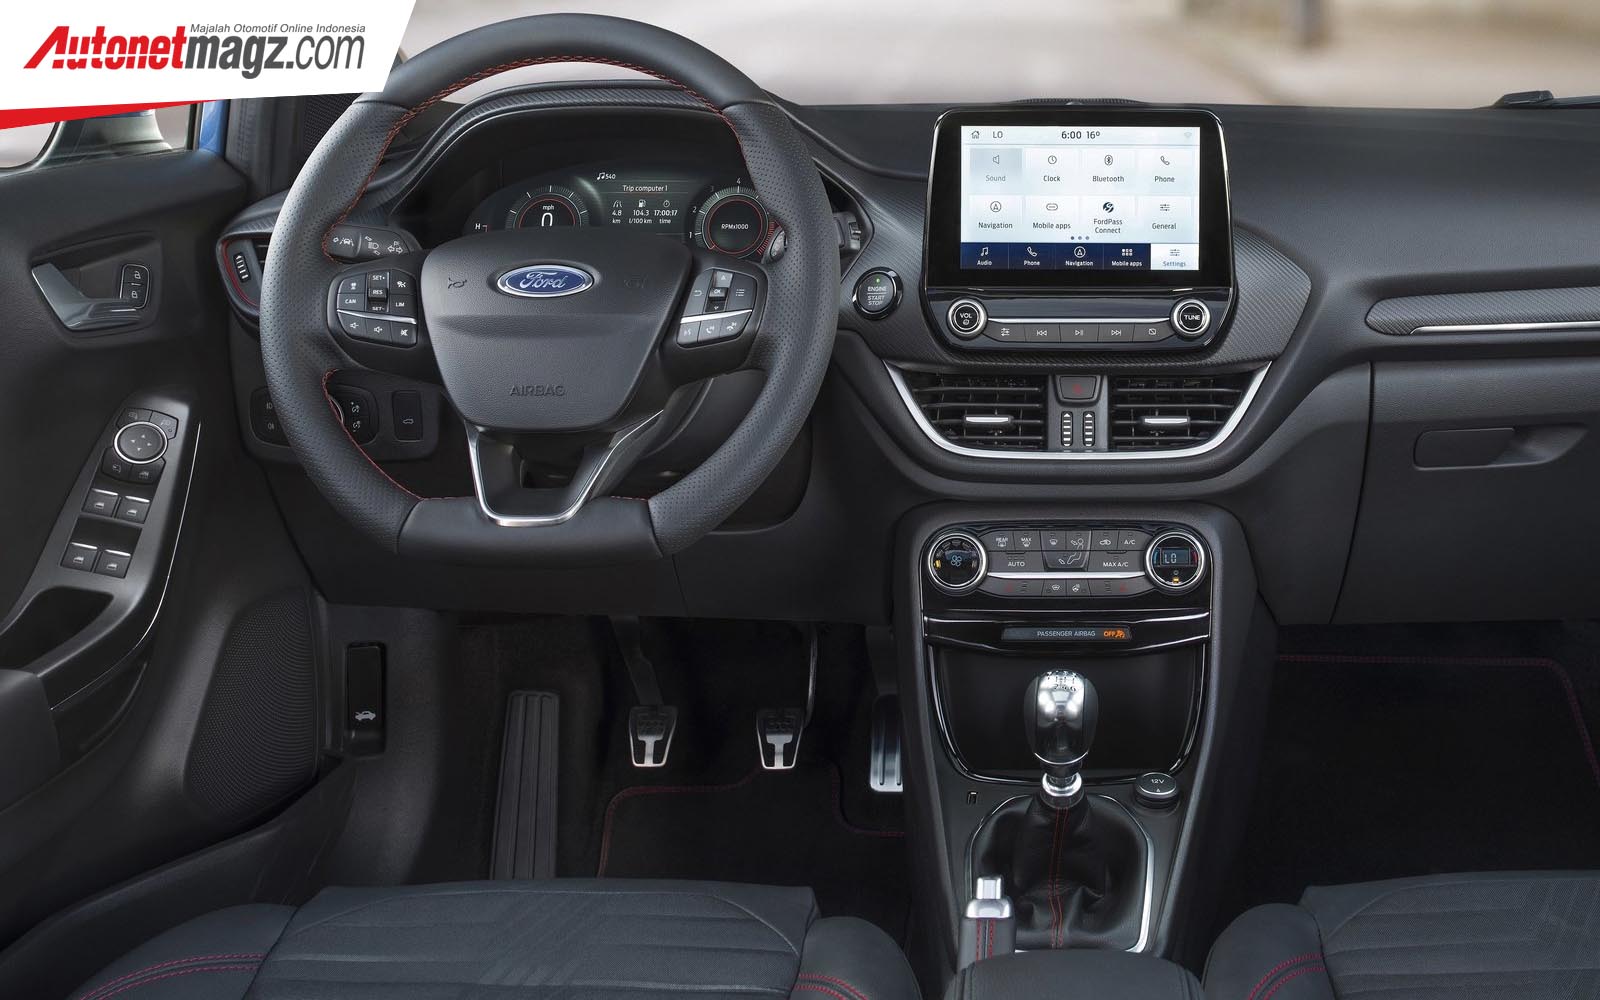 Berita, Interior Ford Puma 2020: Ford Puma 2020 : CUV Unyu Dengan Mesin 152 hp & Transmisi Manual 6 Speed!